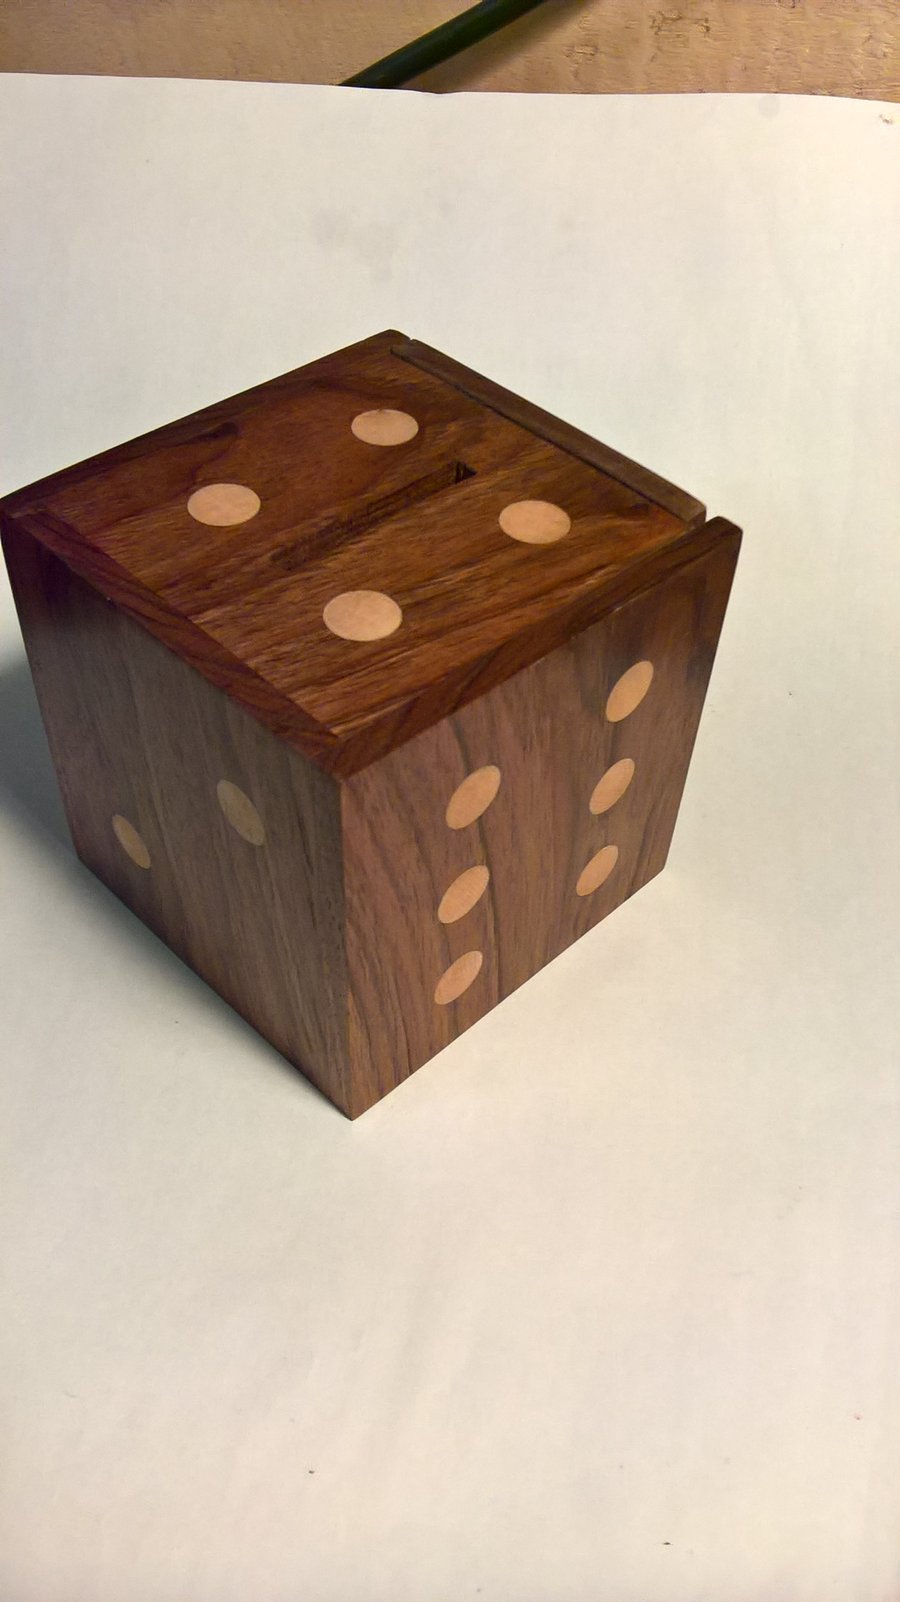 A Black Walnut Money Box with Sycamore dots